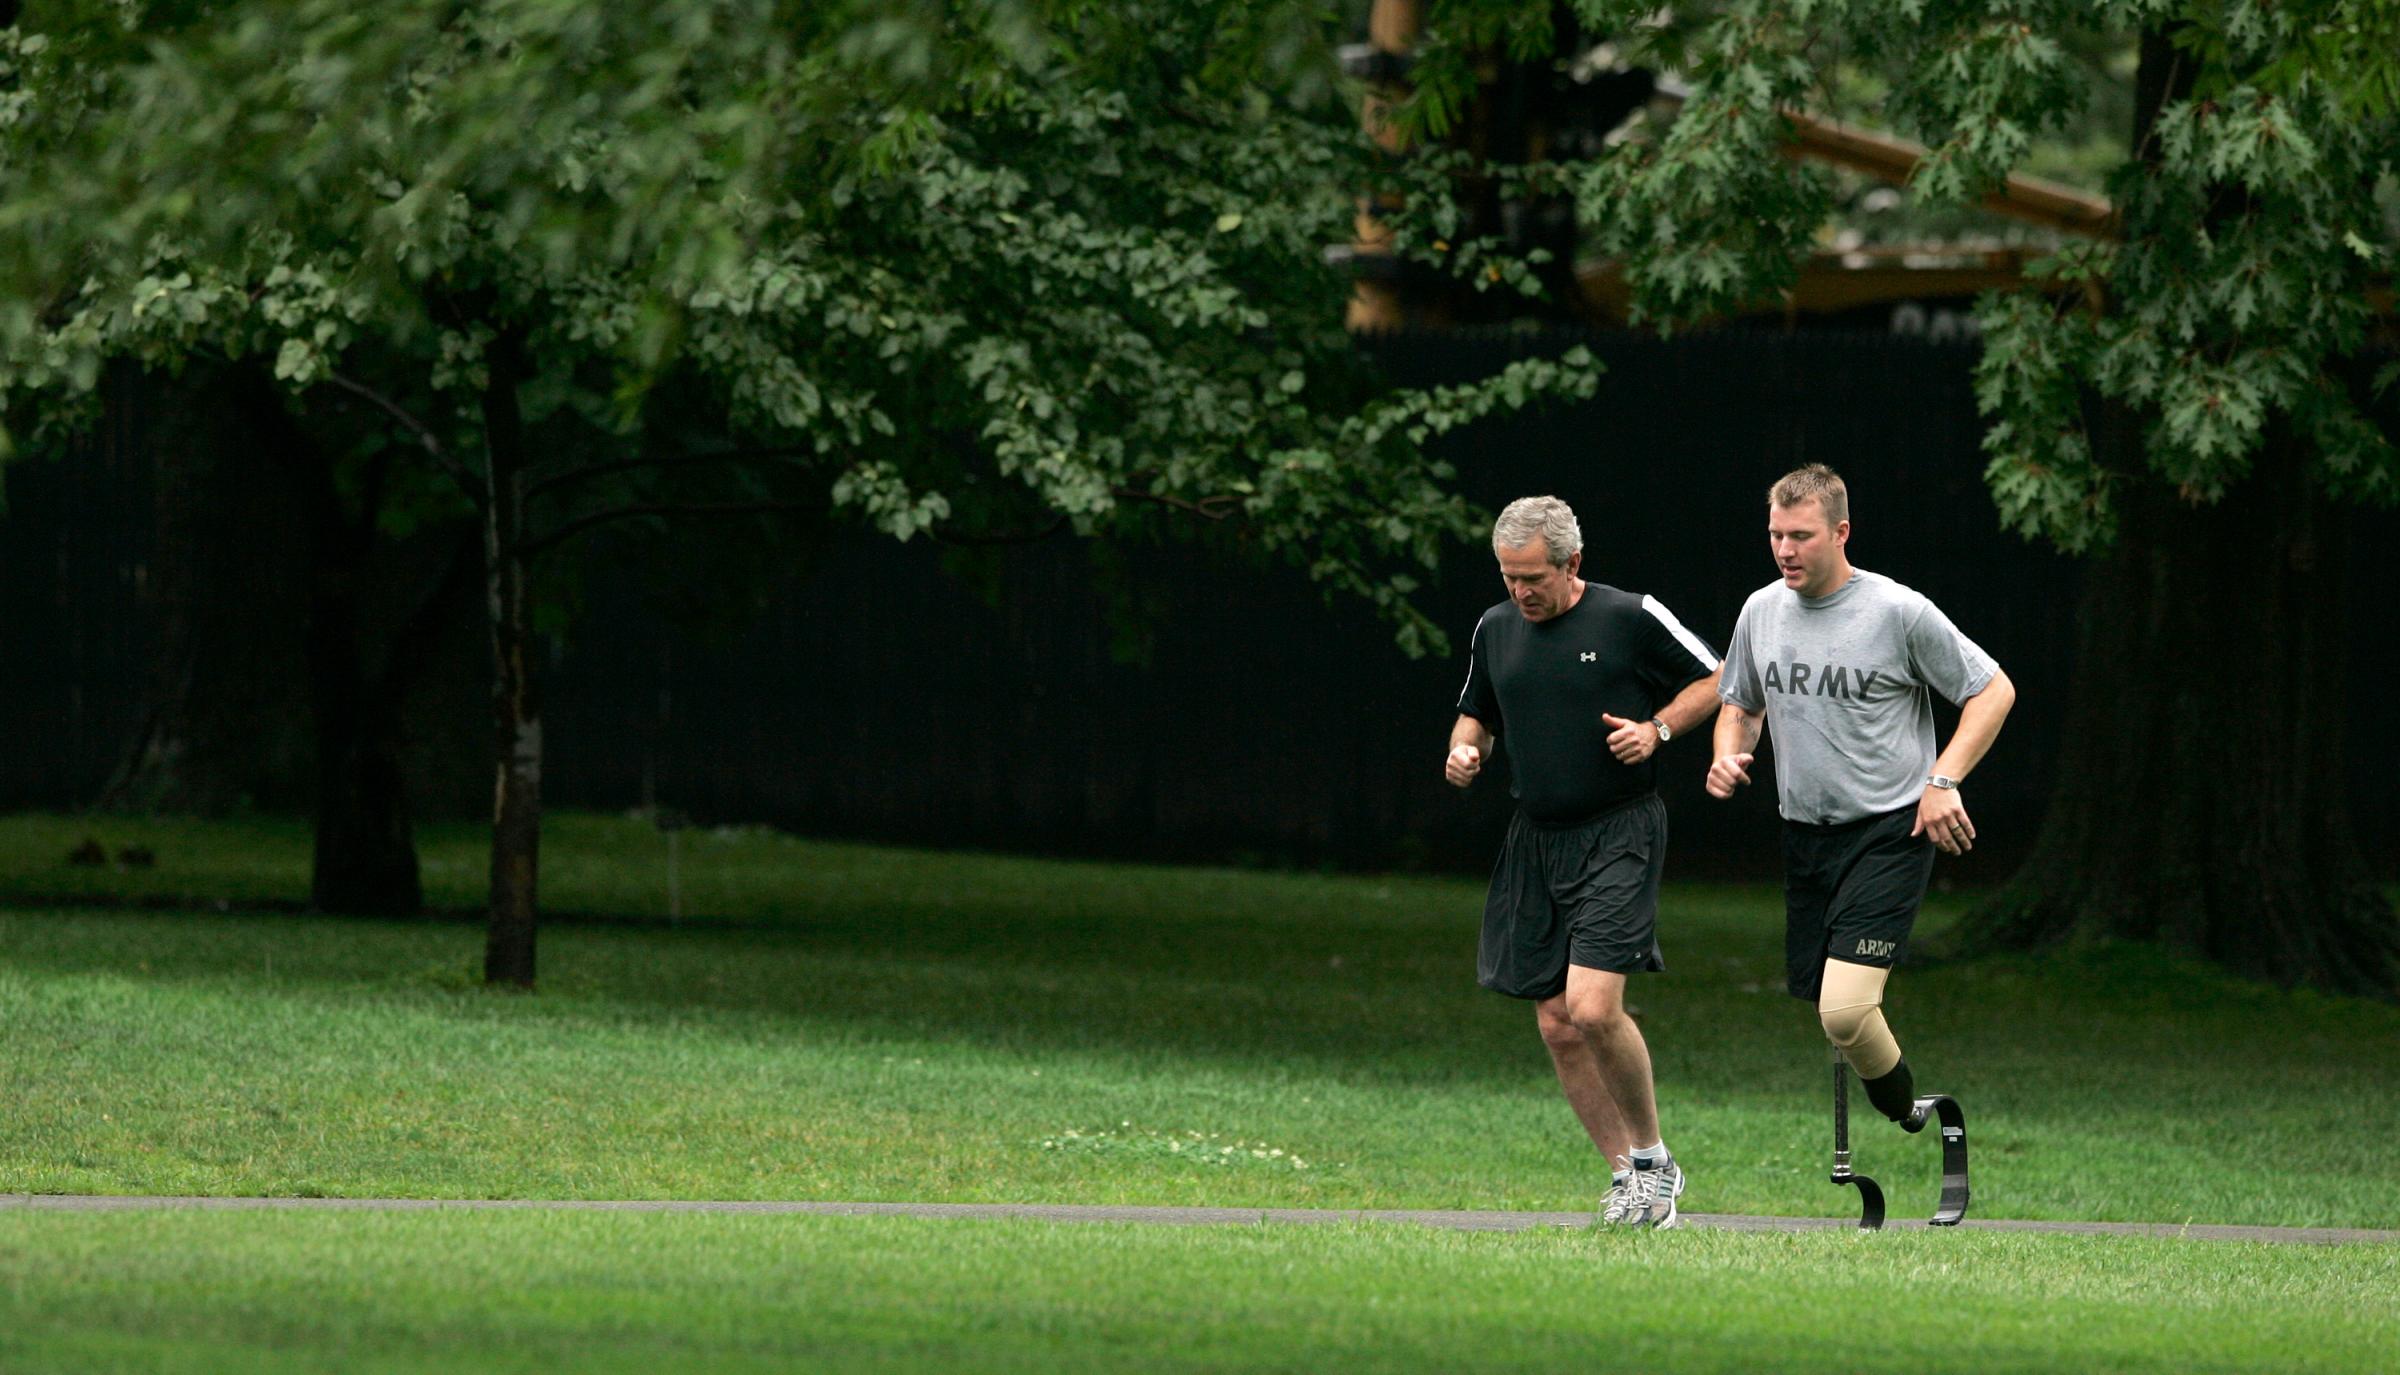 USA - Bush - Veteran - Jogging